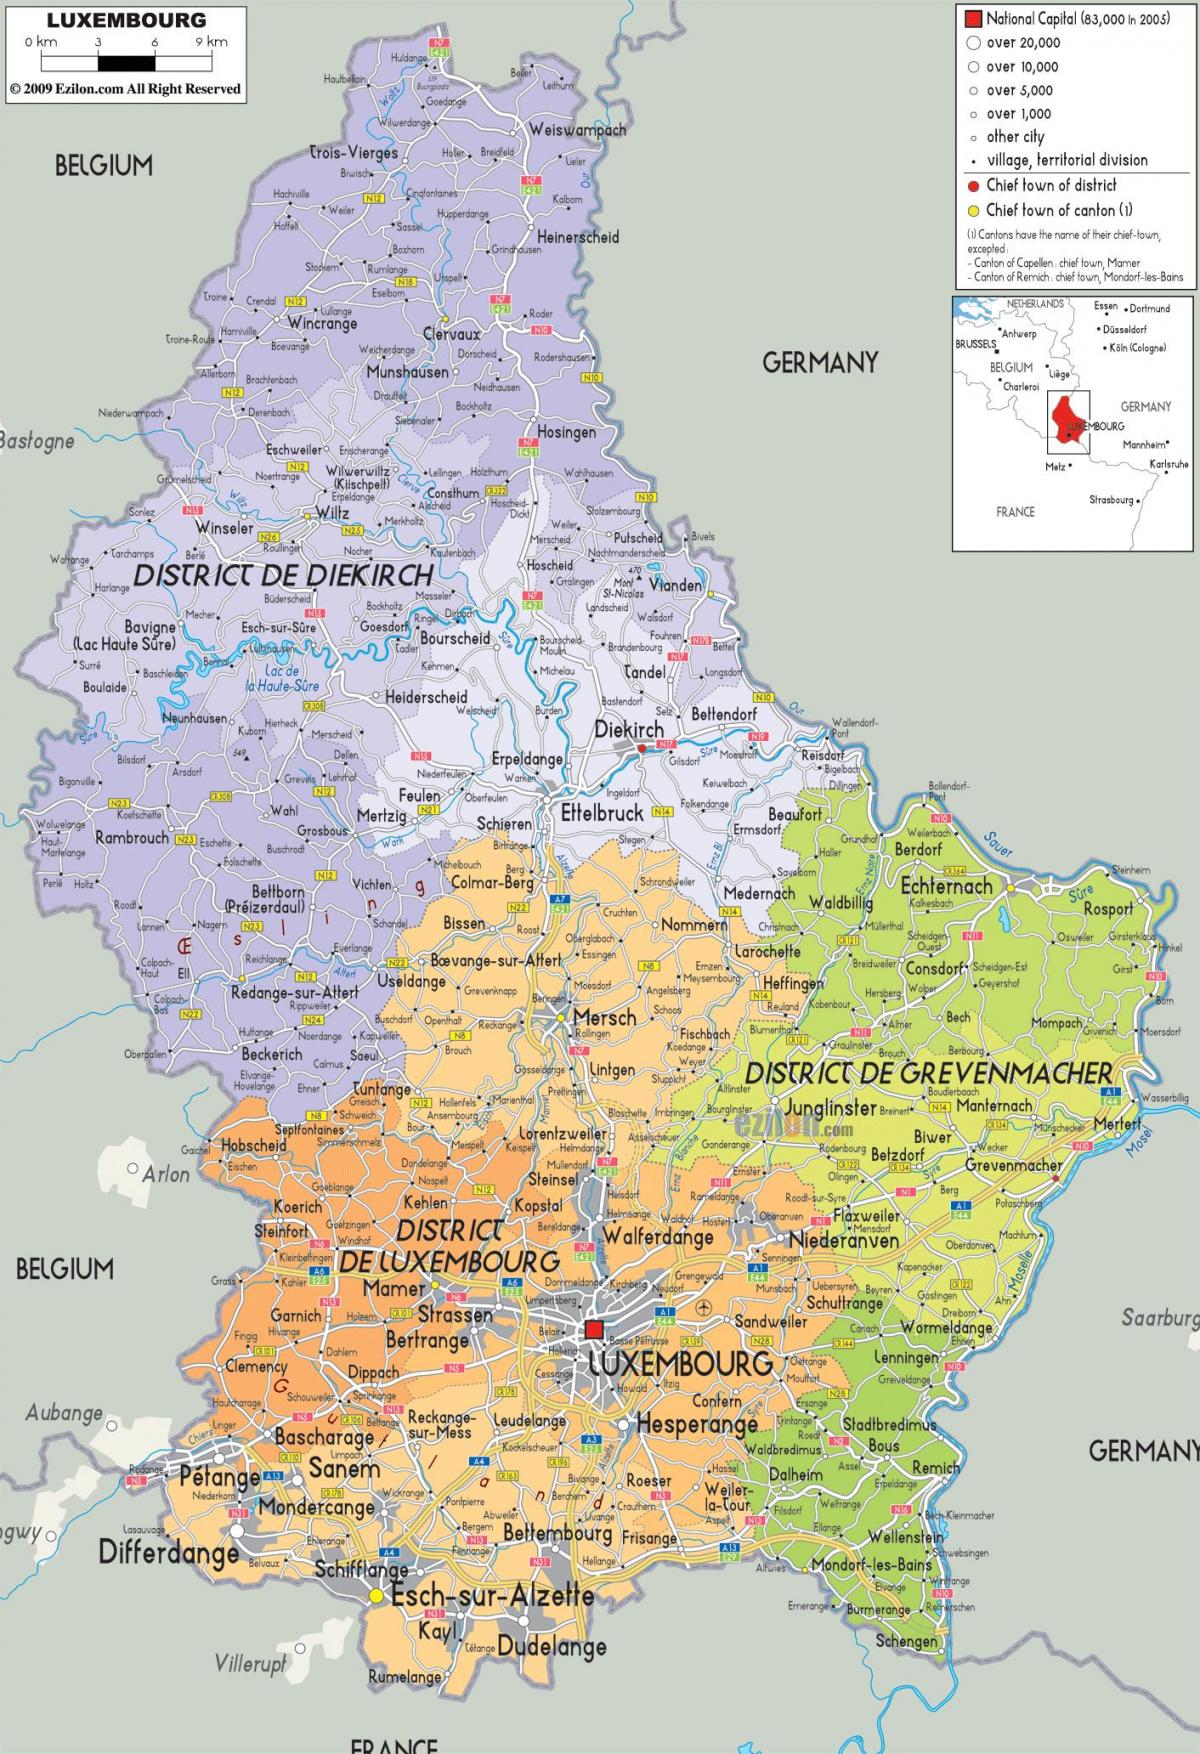 Luxembourg land kort